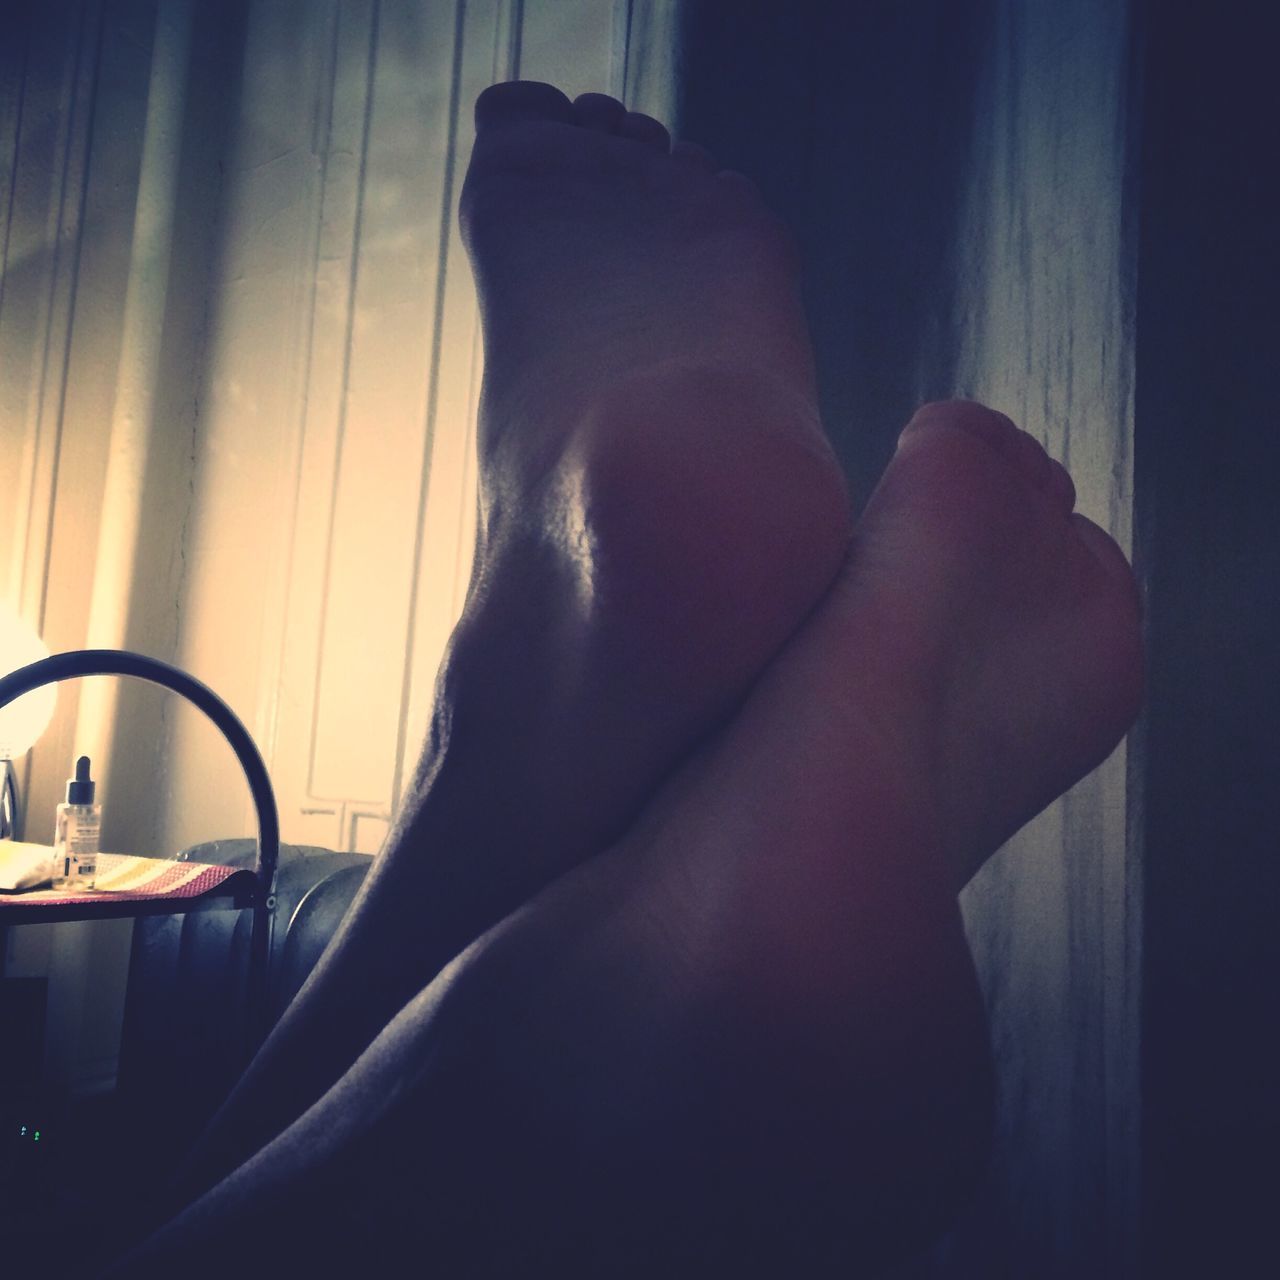 Resting feet